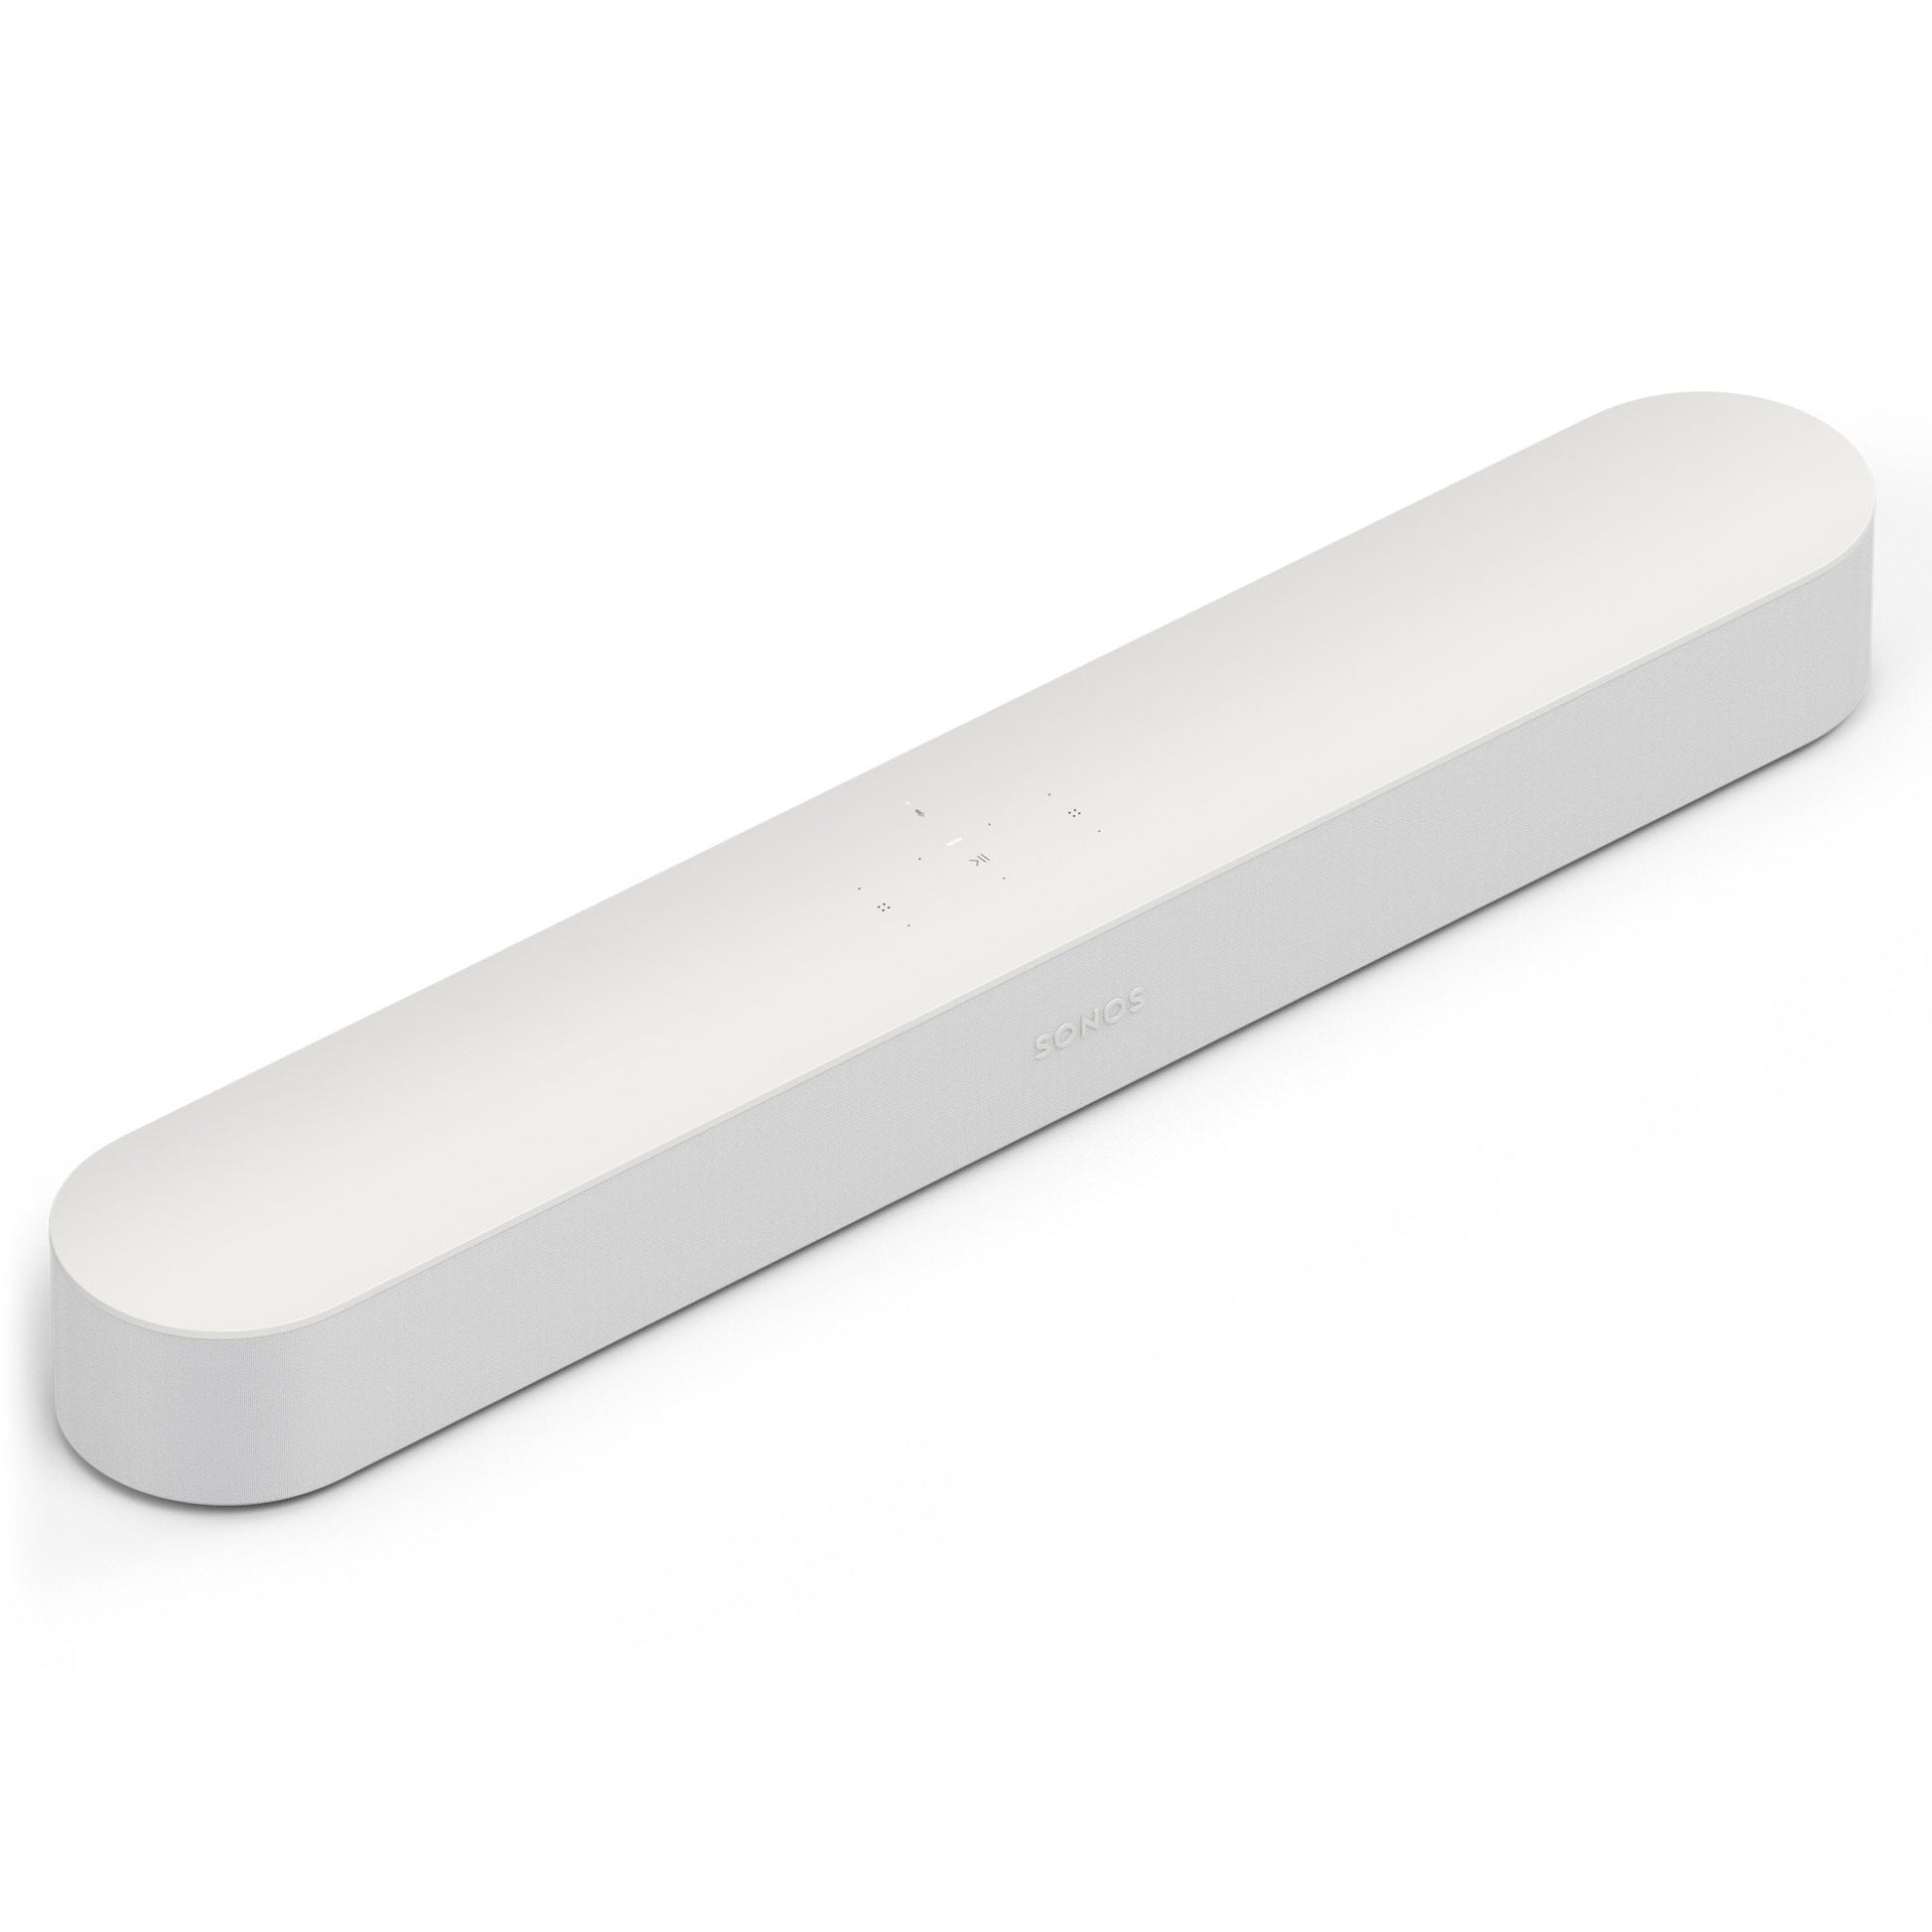 Sonos Beam Smart Speaker (White)- Front View